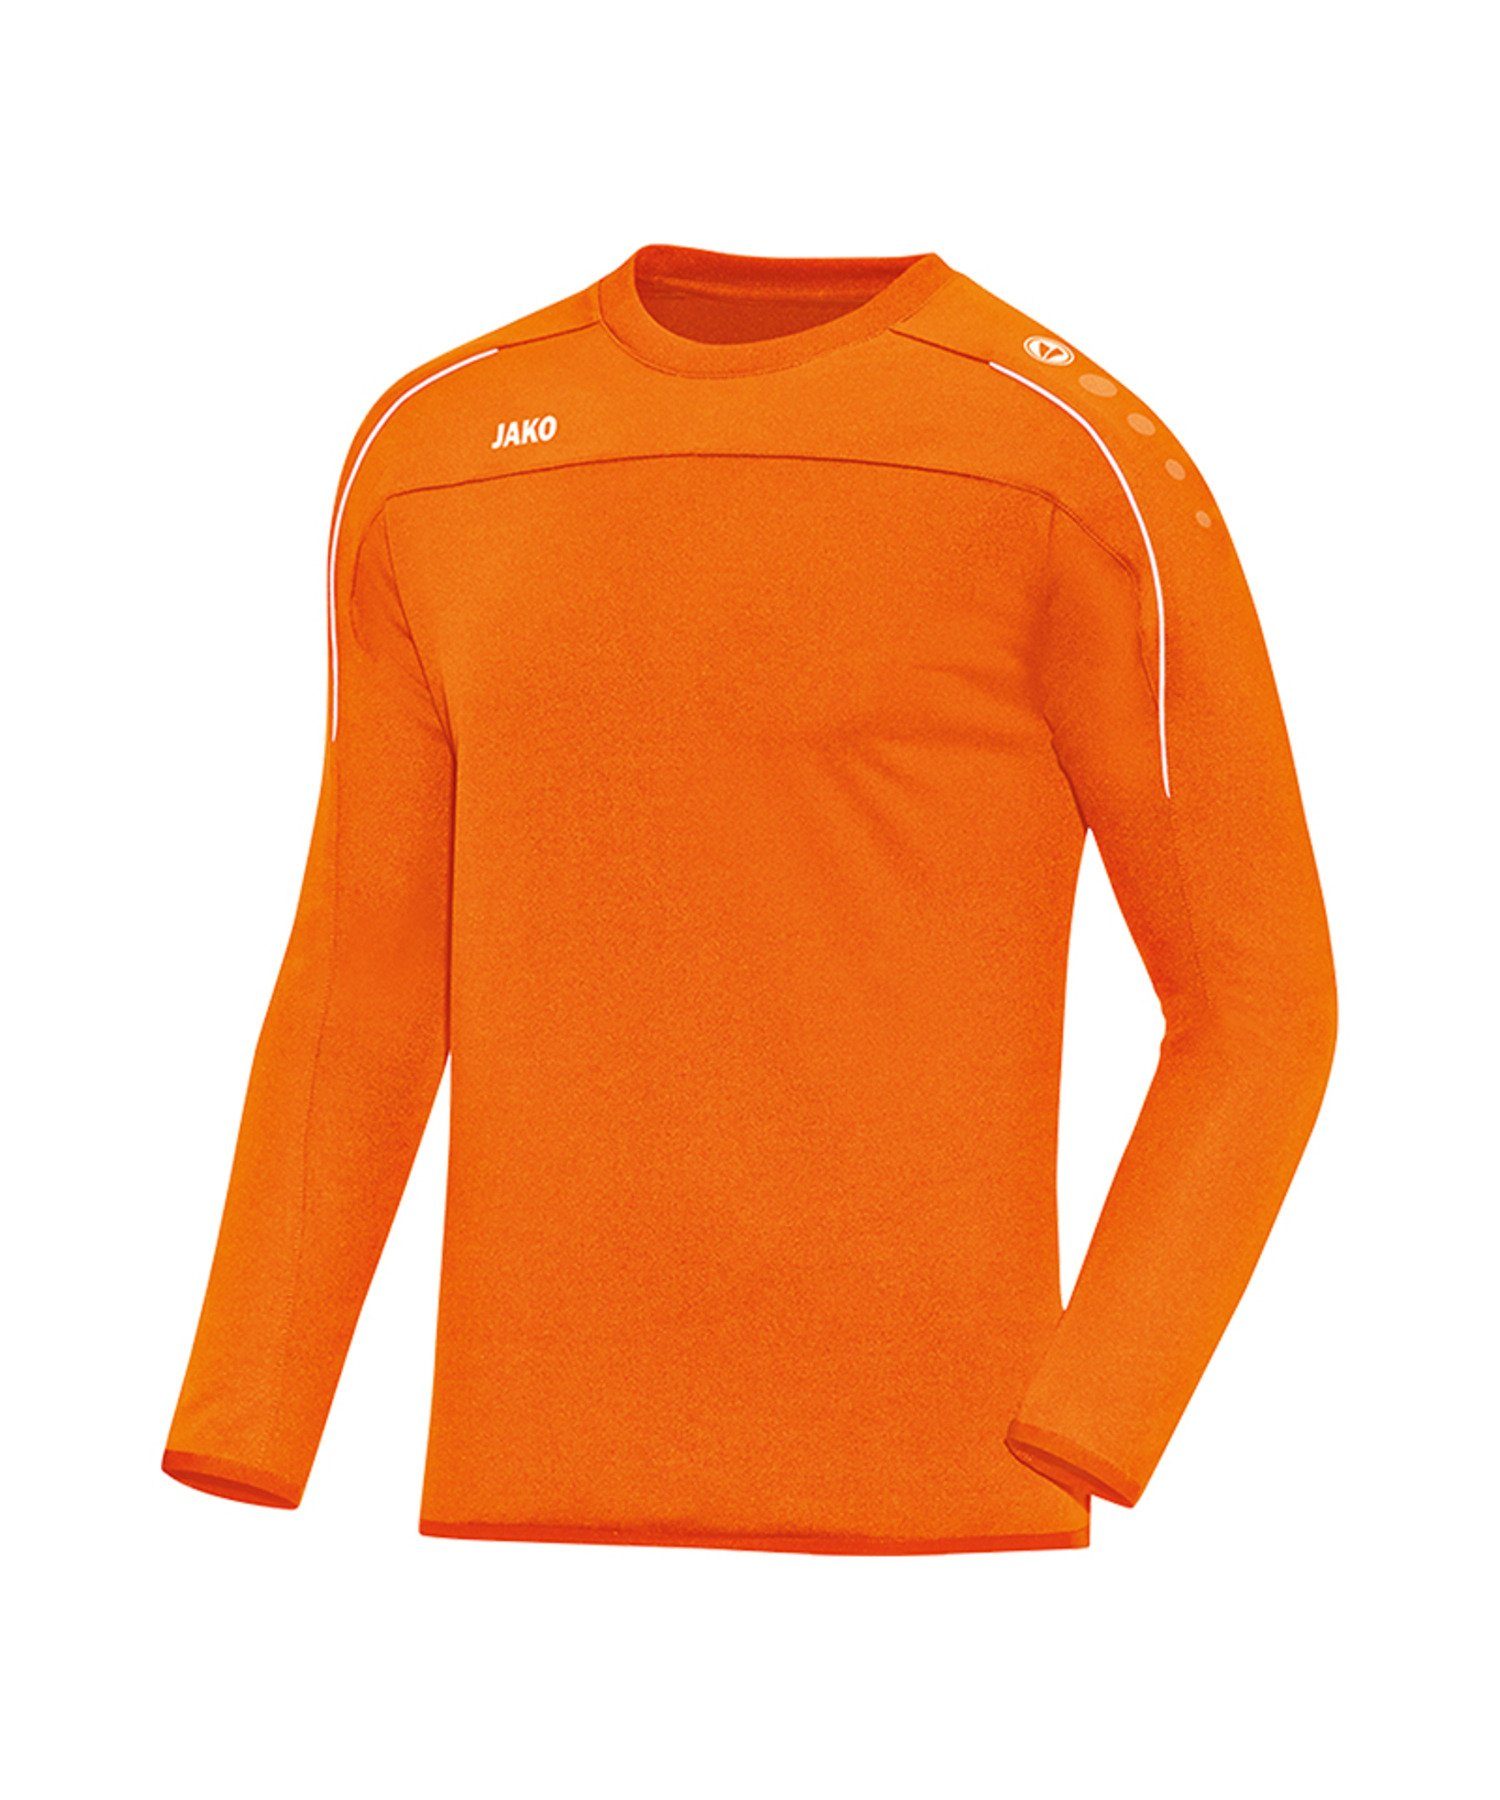 Sweatshirt Jako Orange Classico Sweatshirt